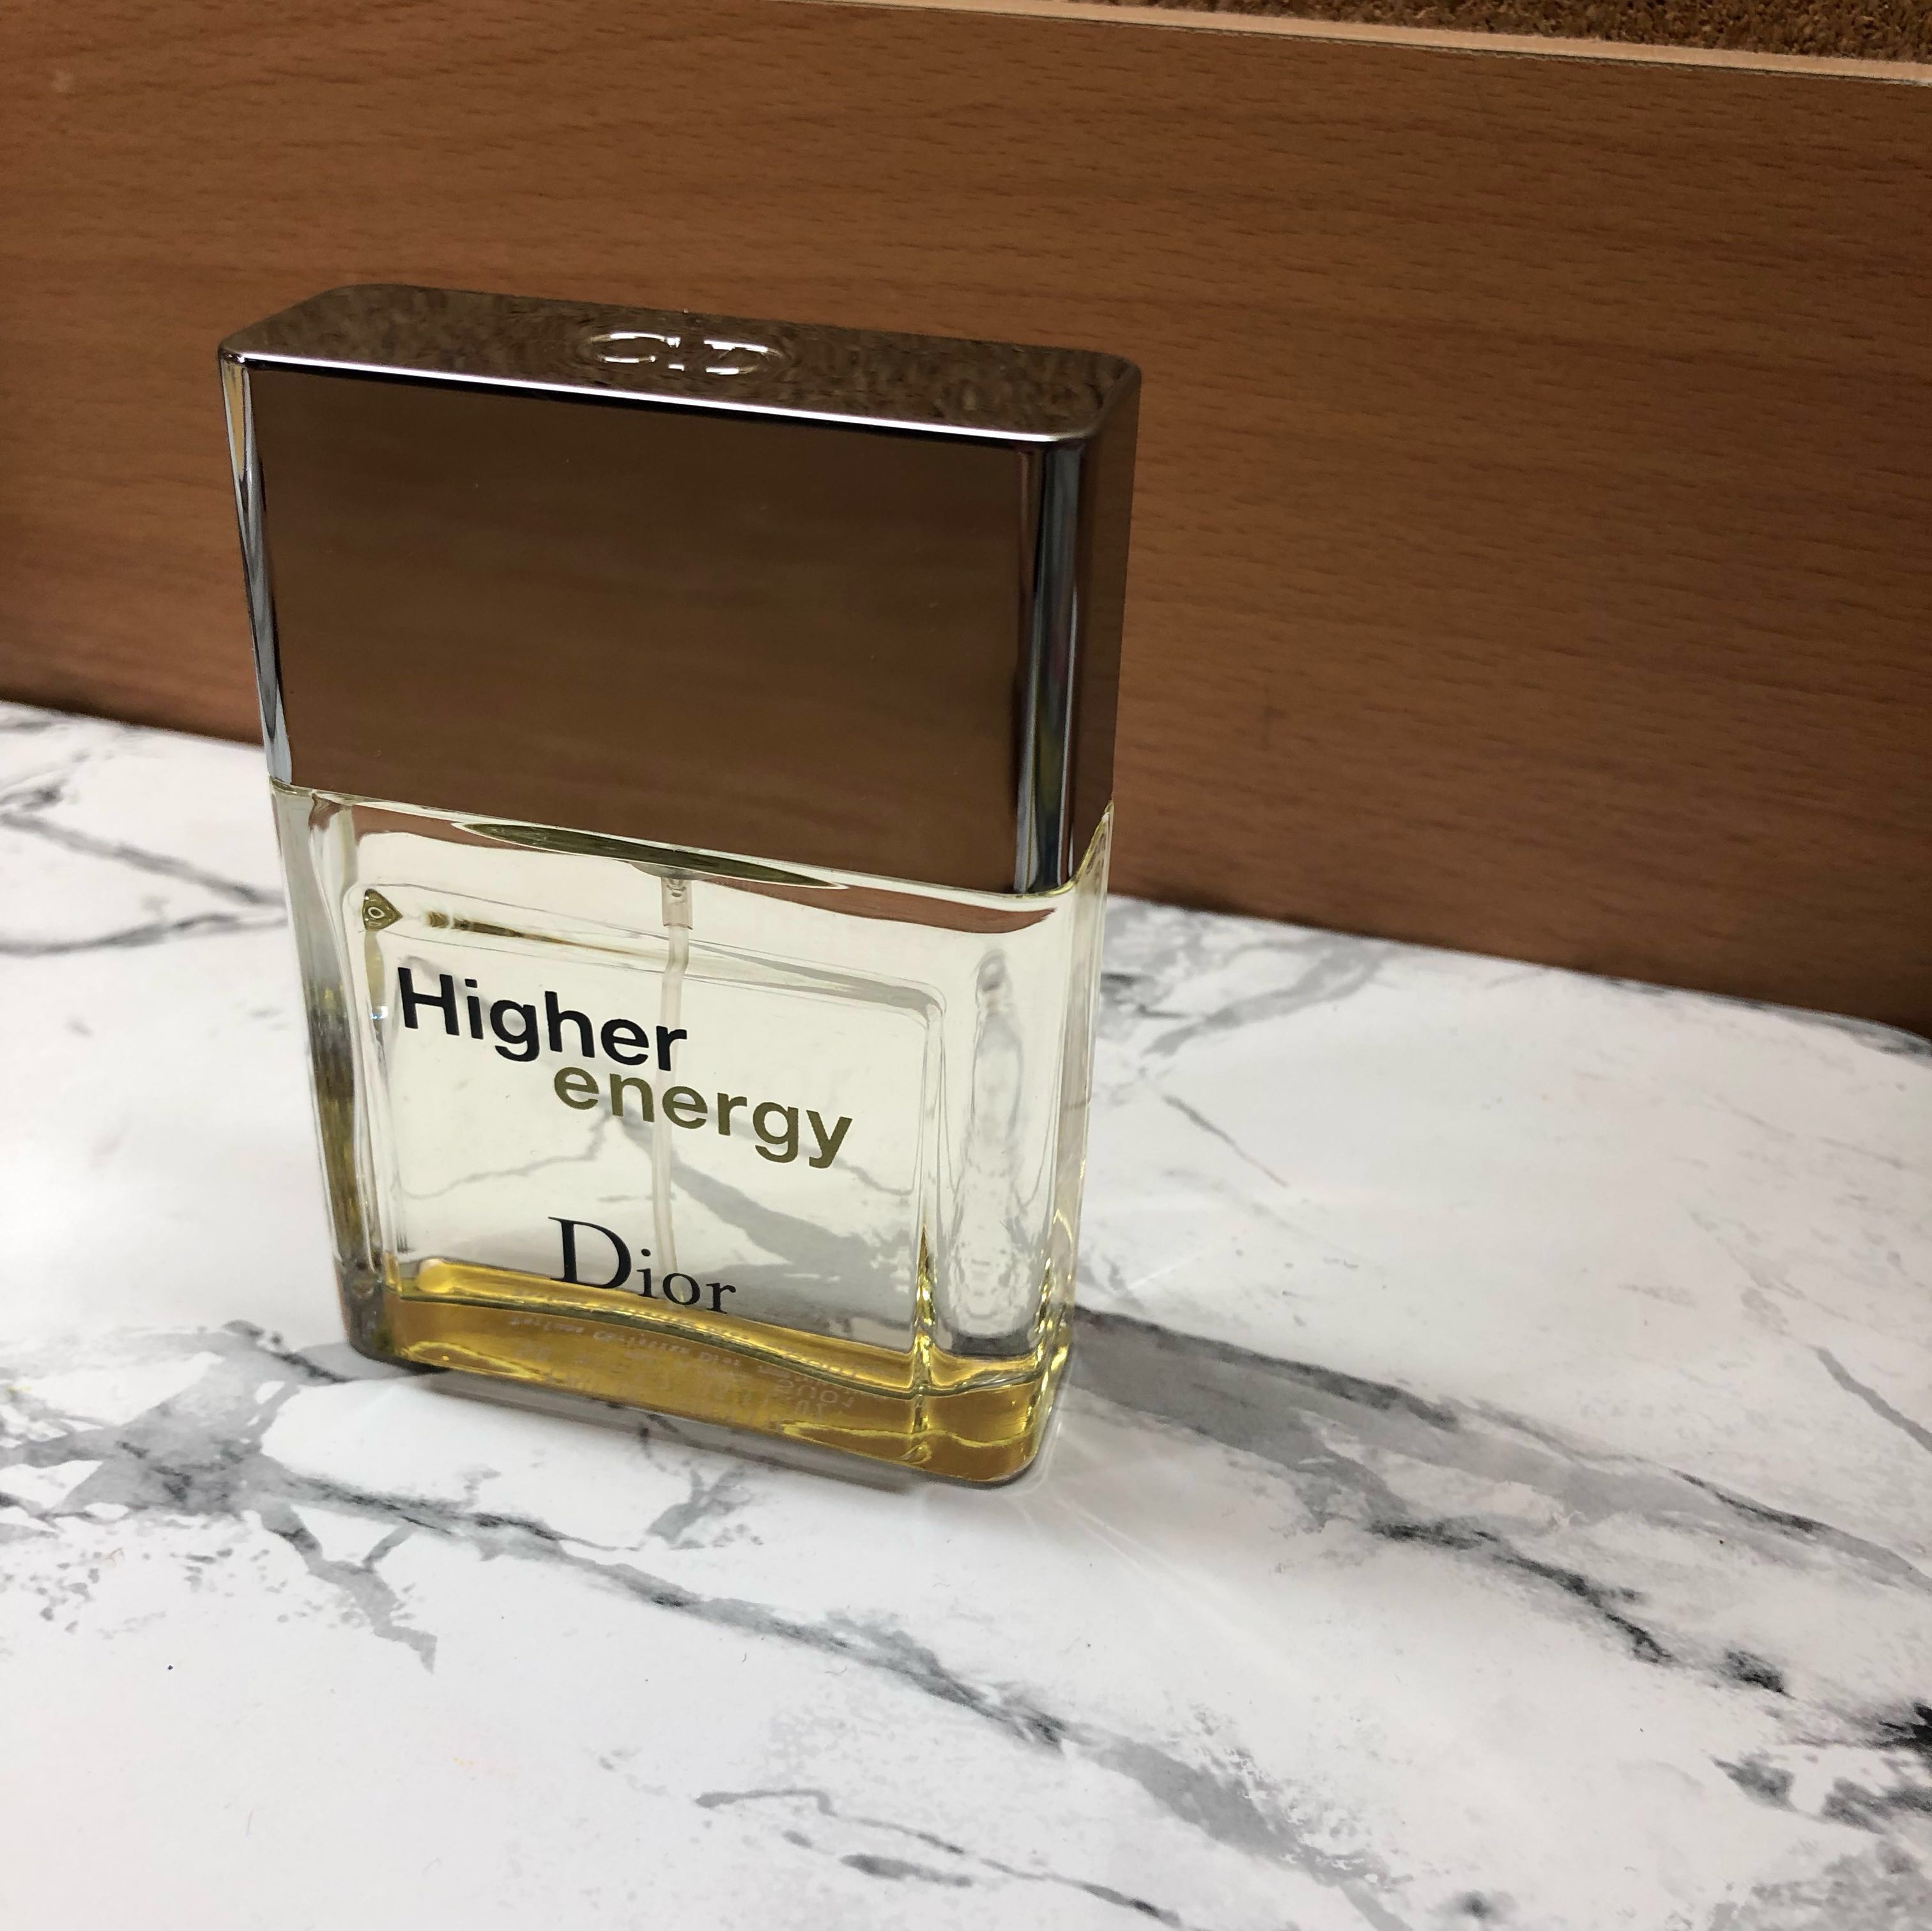 Dior Higher energy 50ml